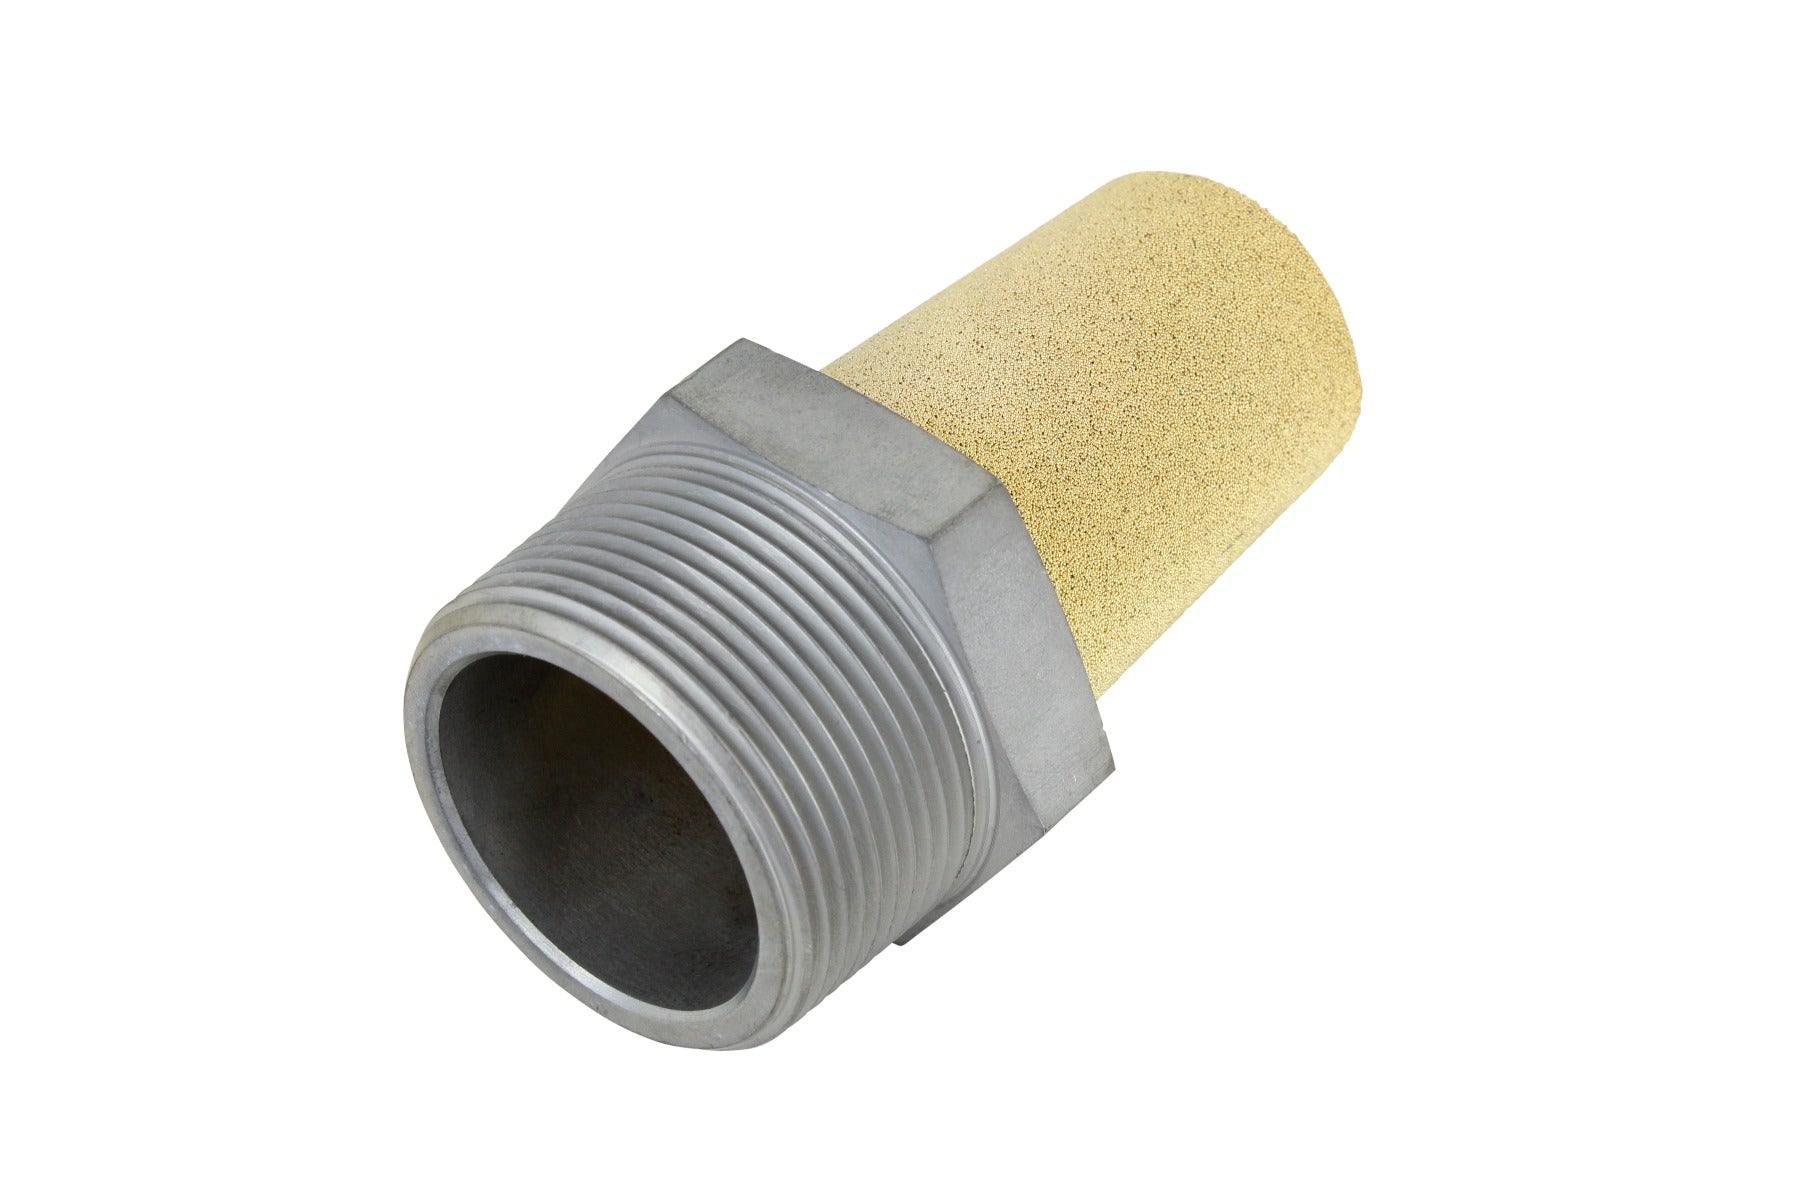 Pneumatic Exhaust Muffler, 1 1/2” MNPT 40 Micron Sintered Bronze Silencer/Diffuse air & Noise Reducer - Box of 25